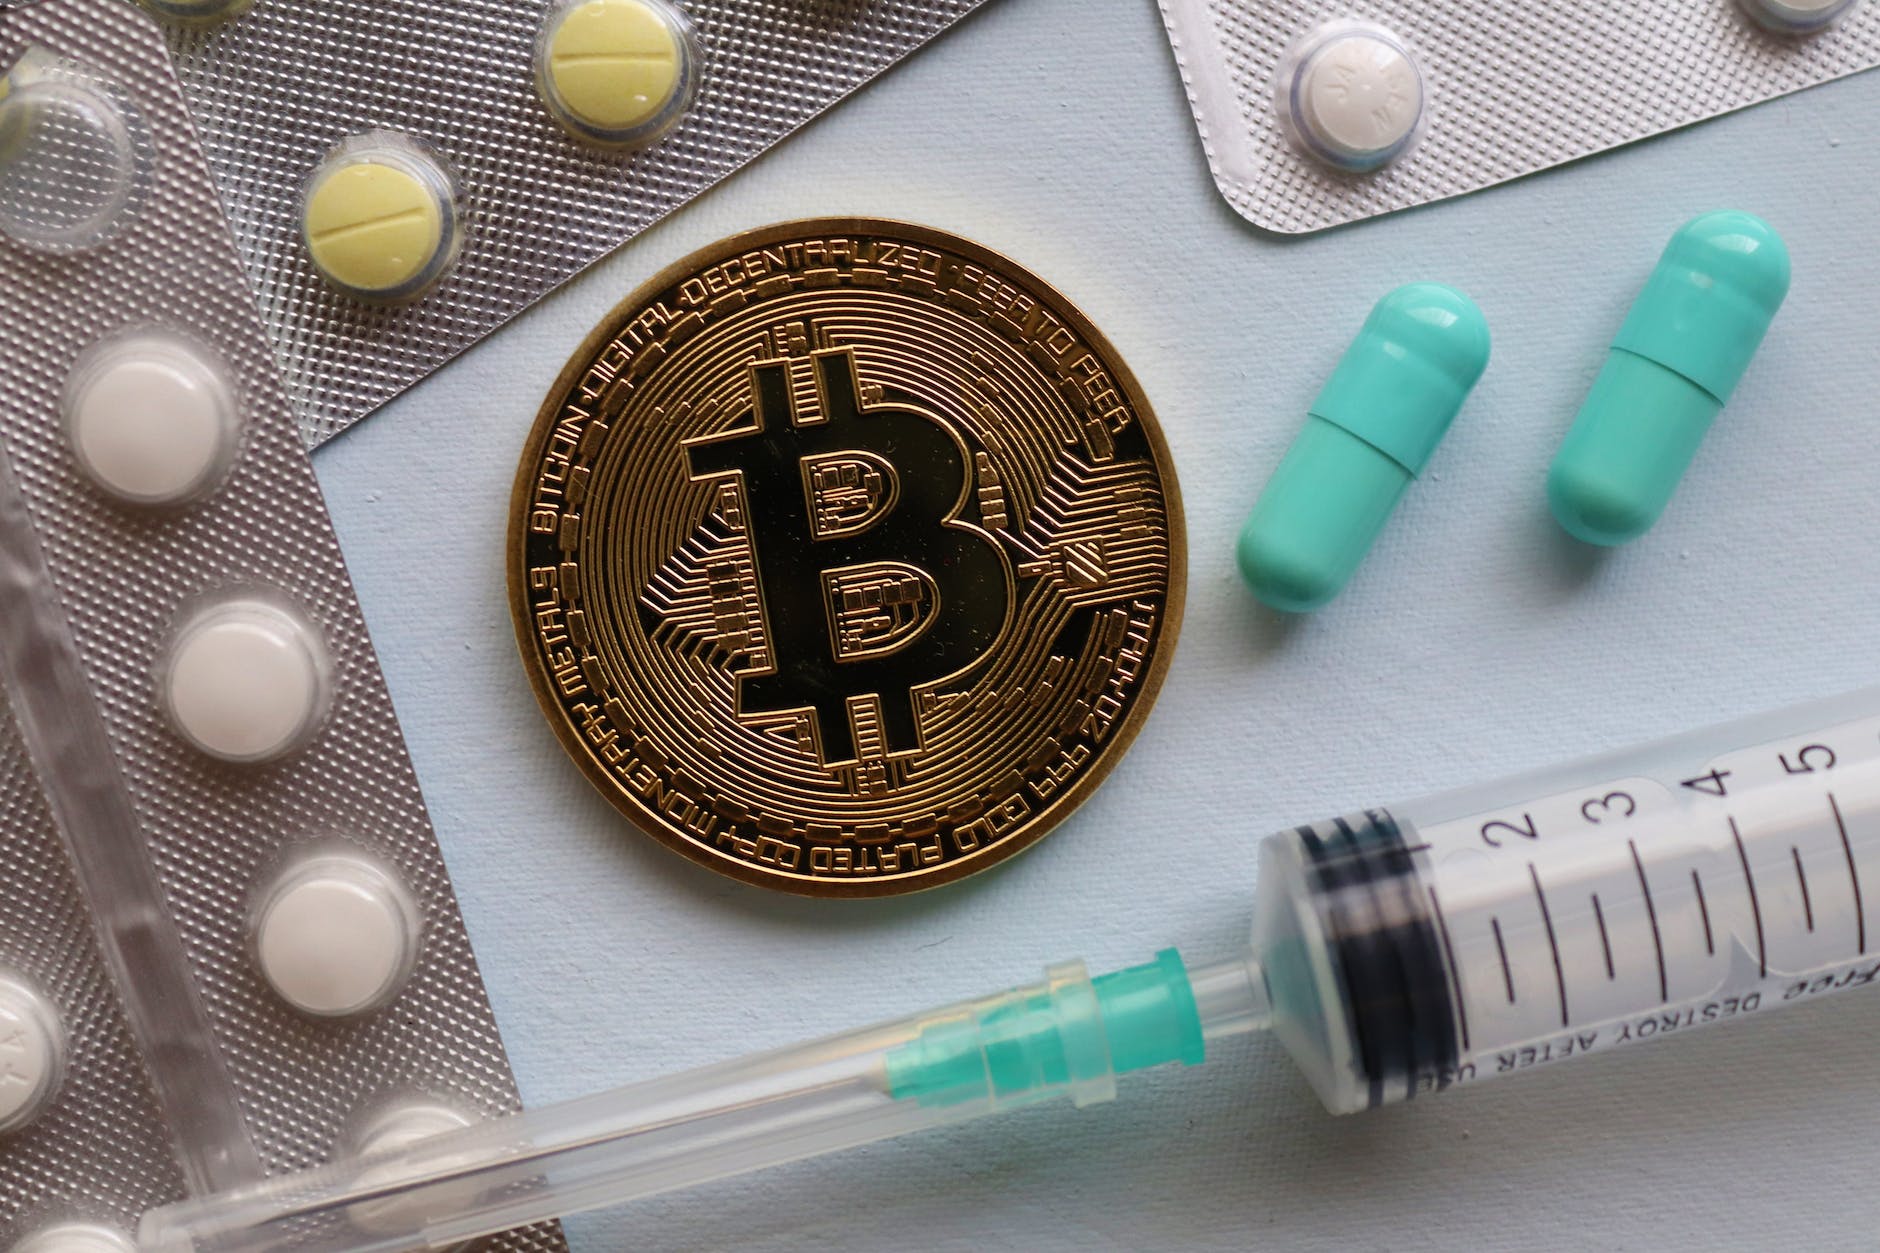 bitcoin and pills on table